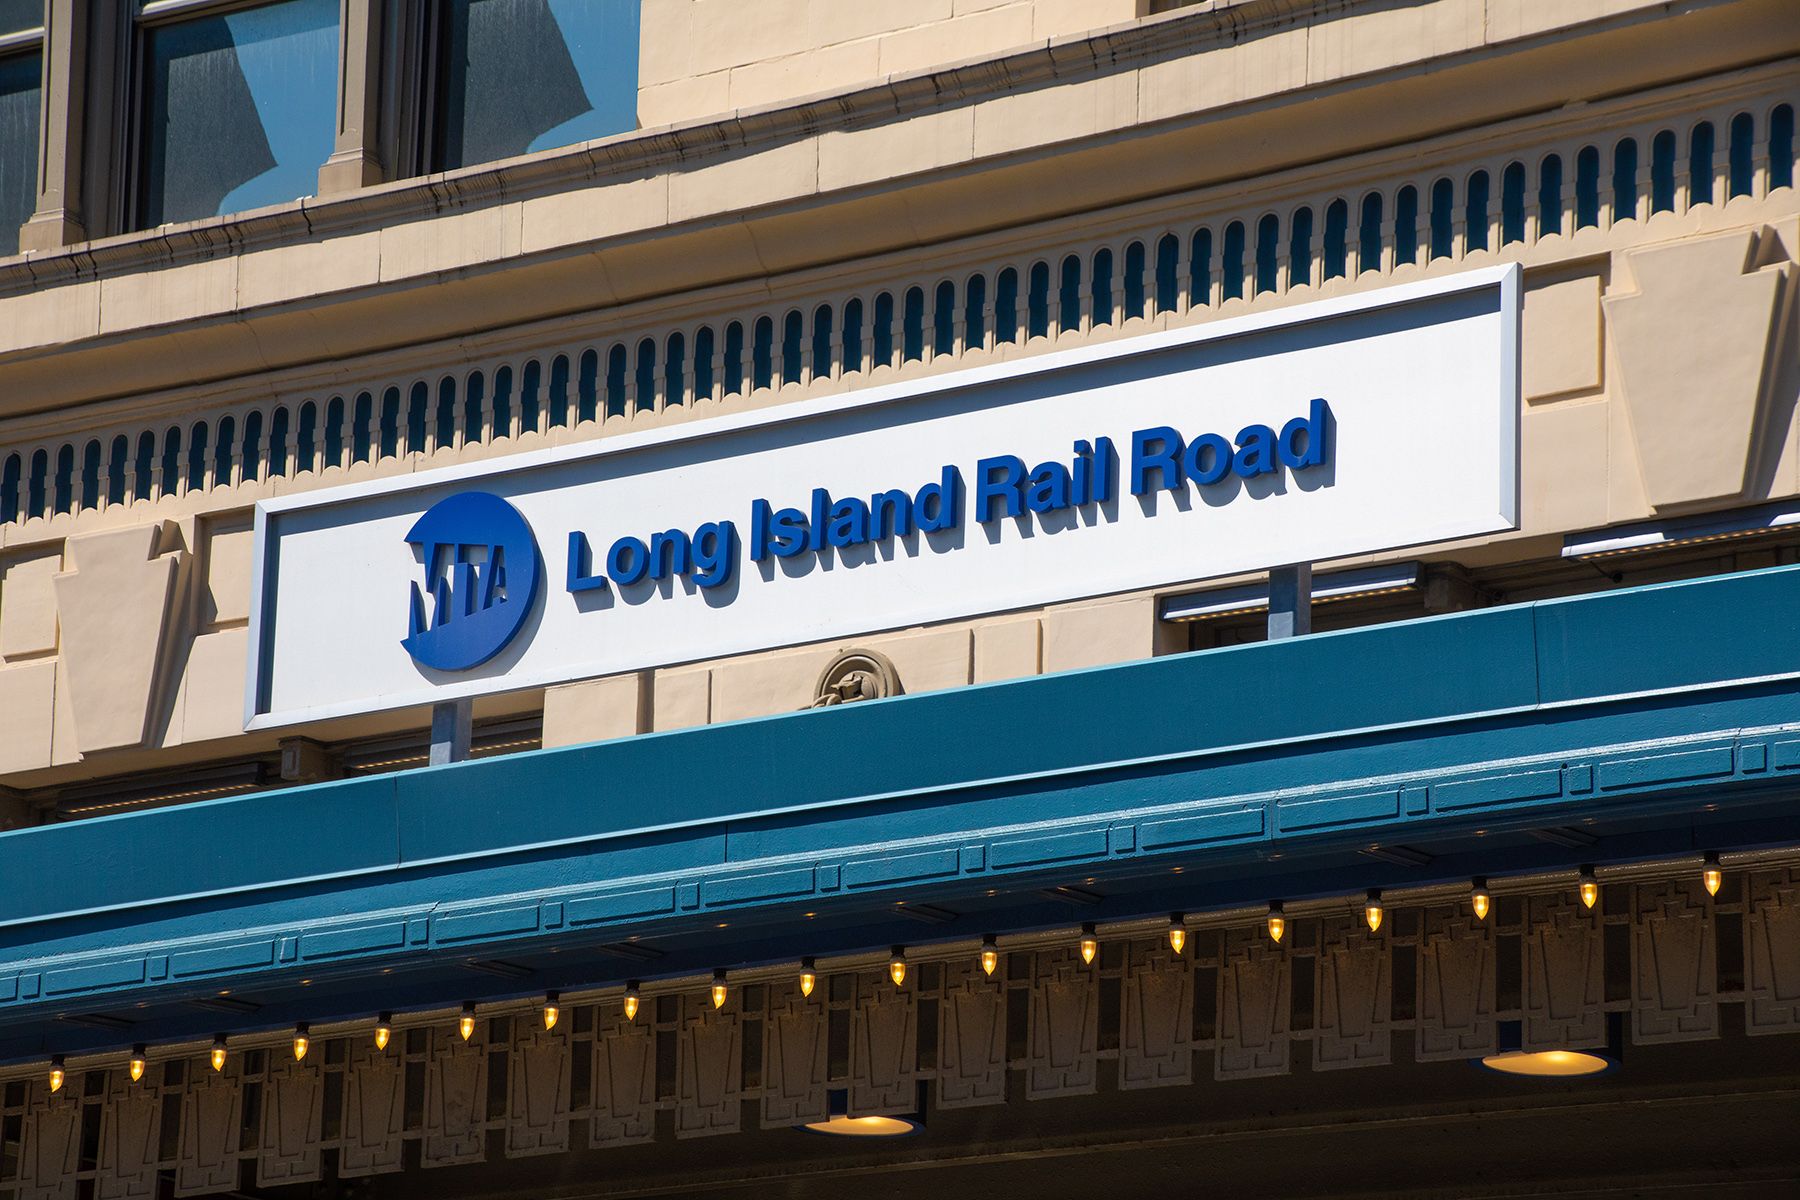 MTA Long Island Rail Road sign on building